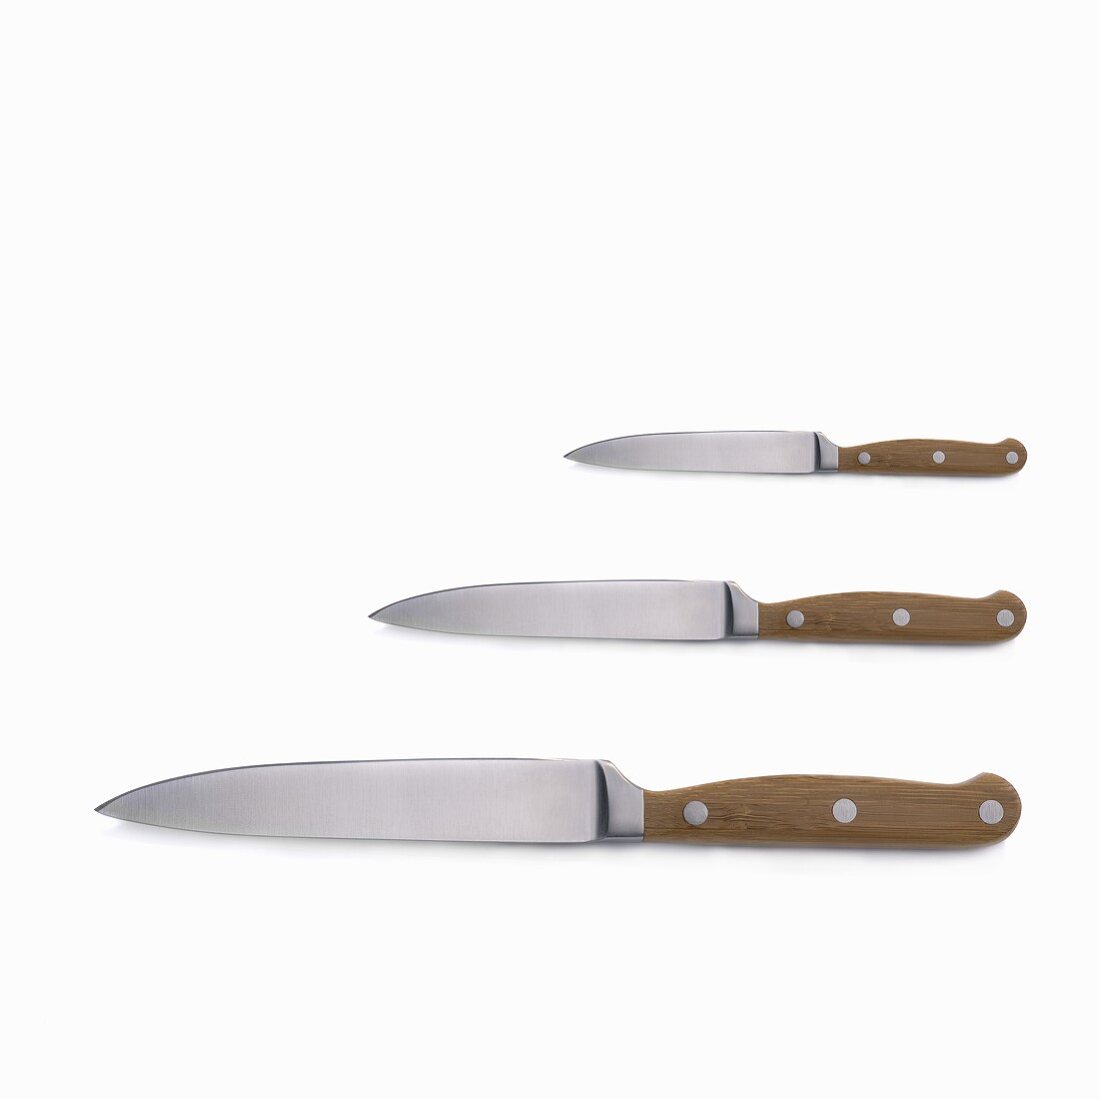 Three kitchen knives